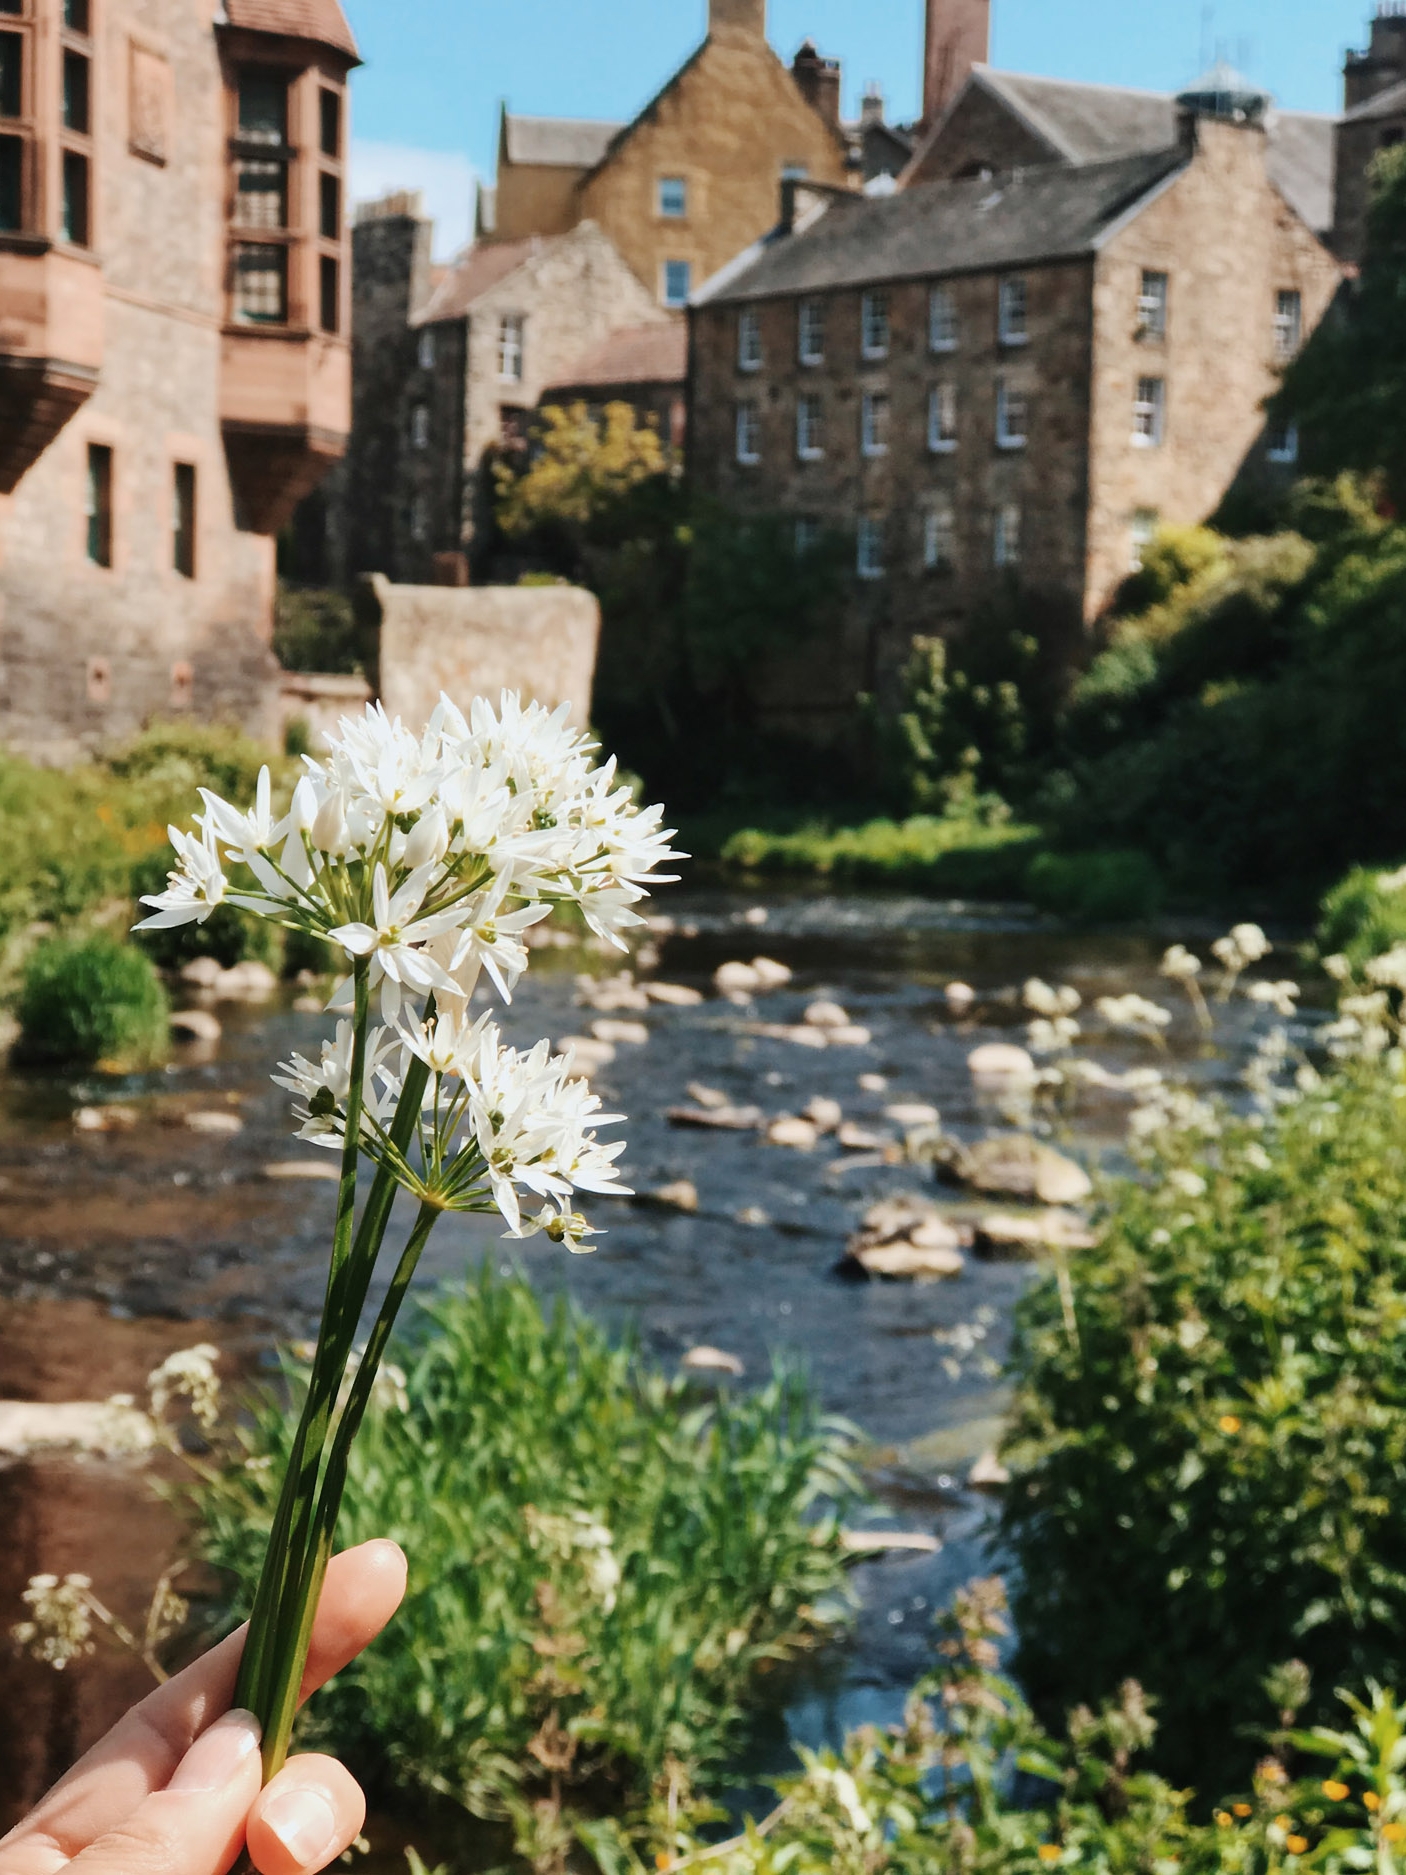 Wild garlic foraged by the Water of Leith, Edinburgh